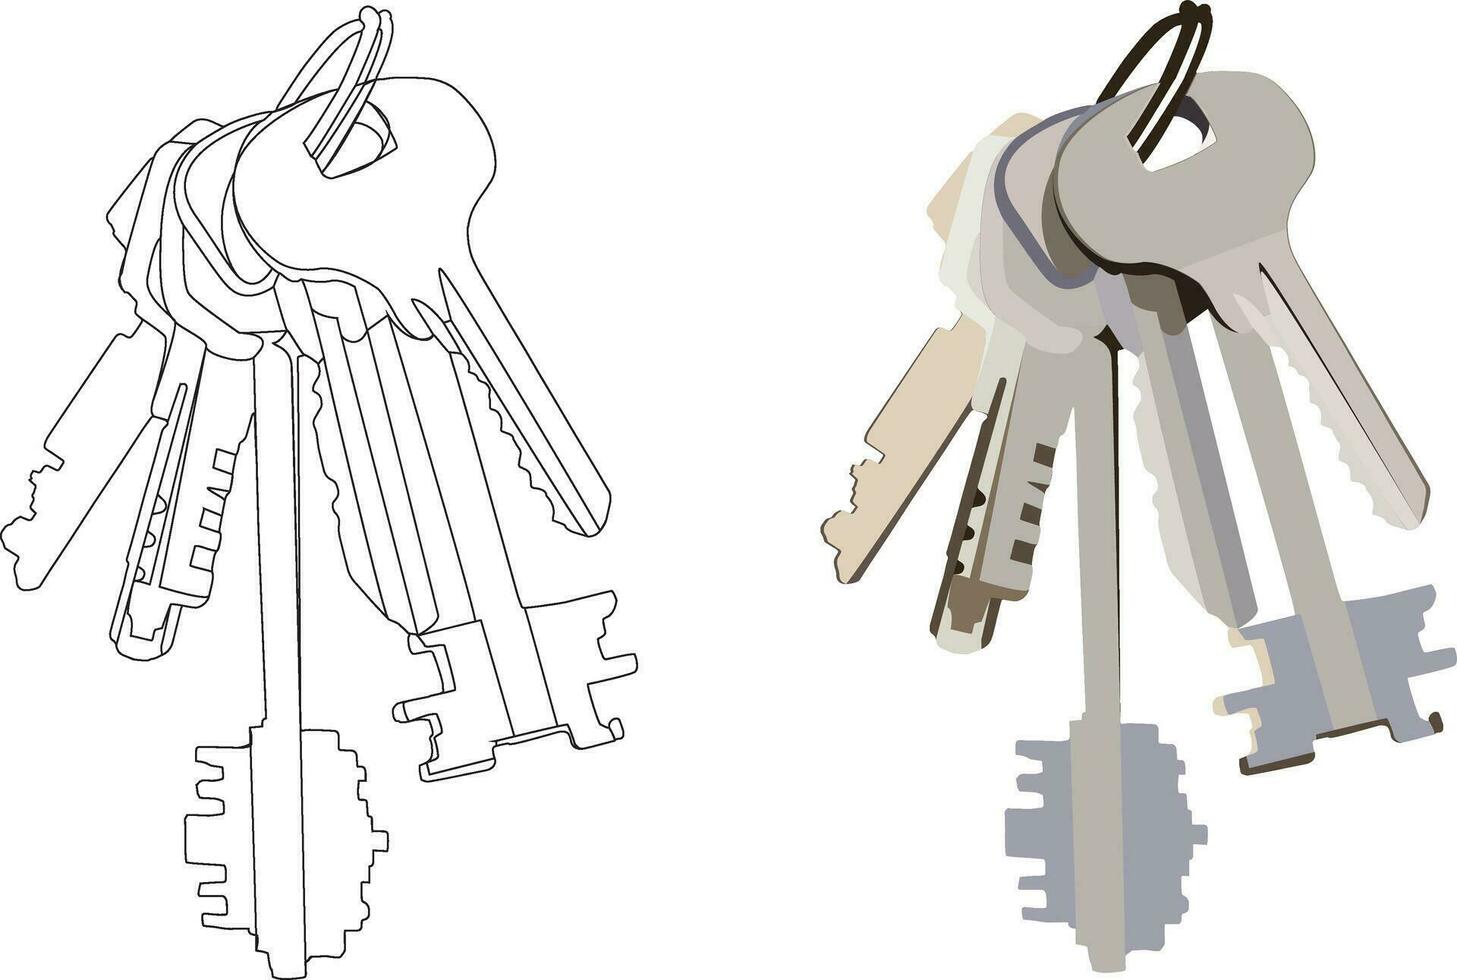 vários chaves para aberto a portas do a casa- vetor